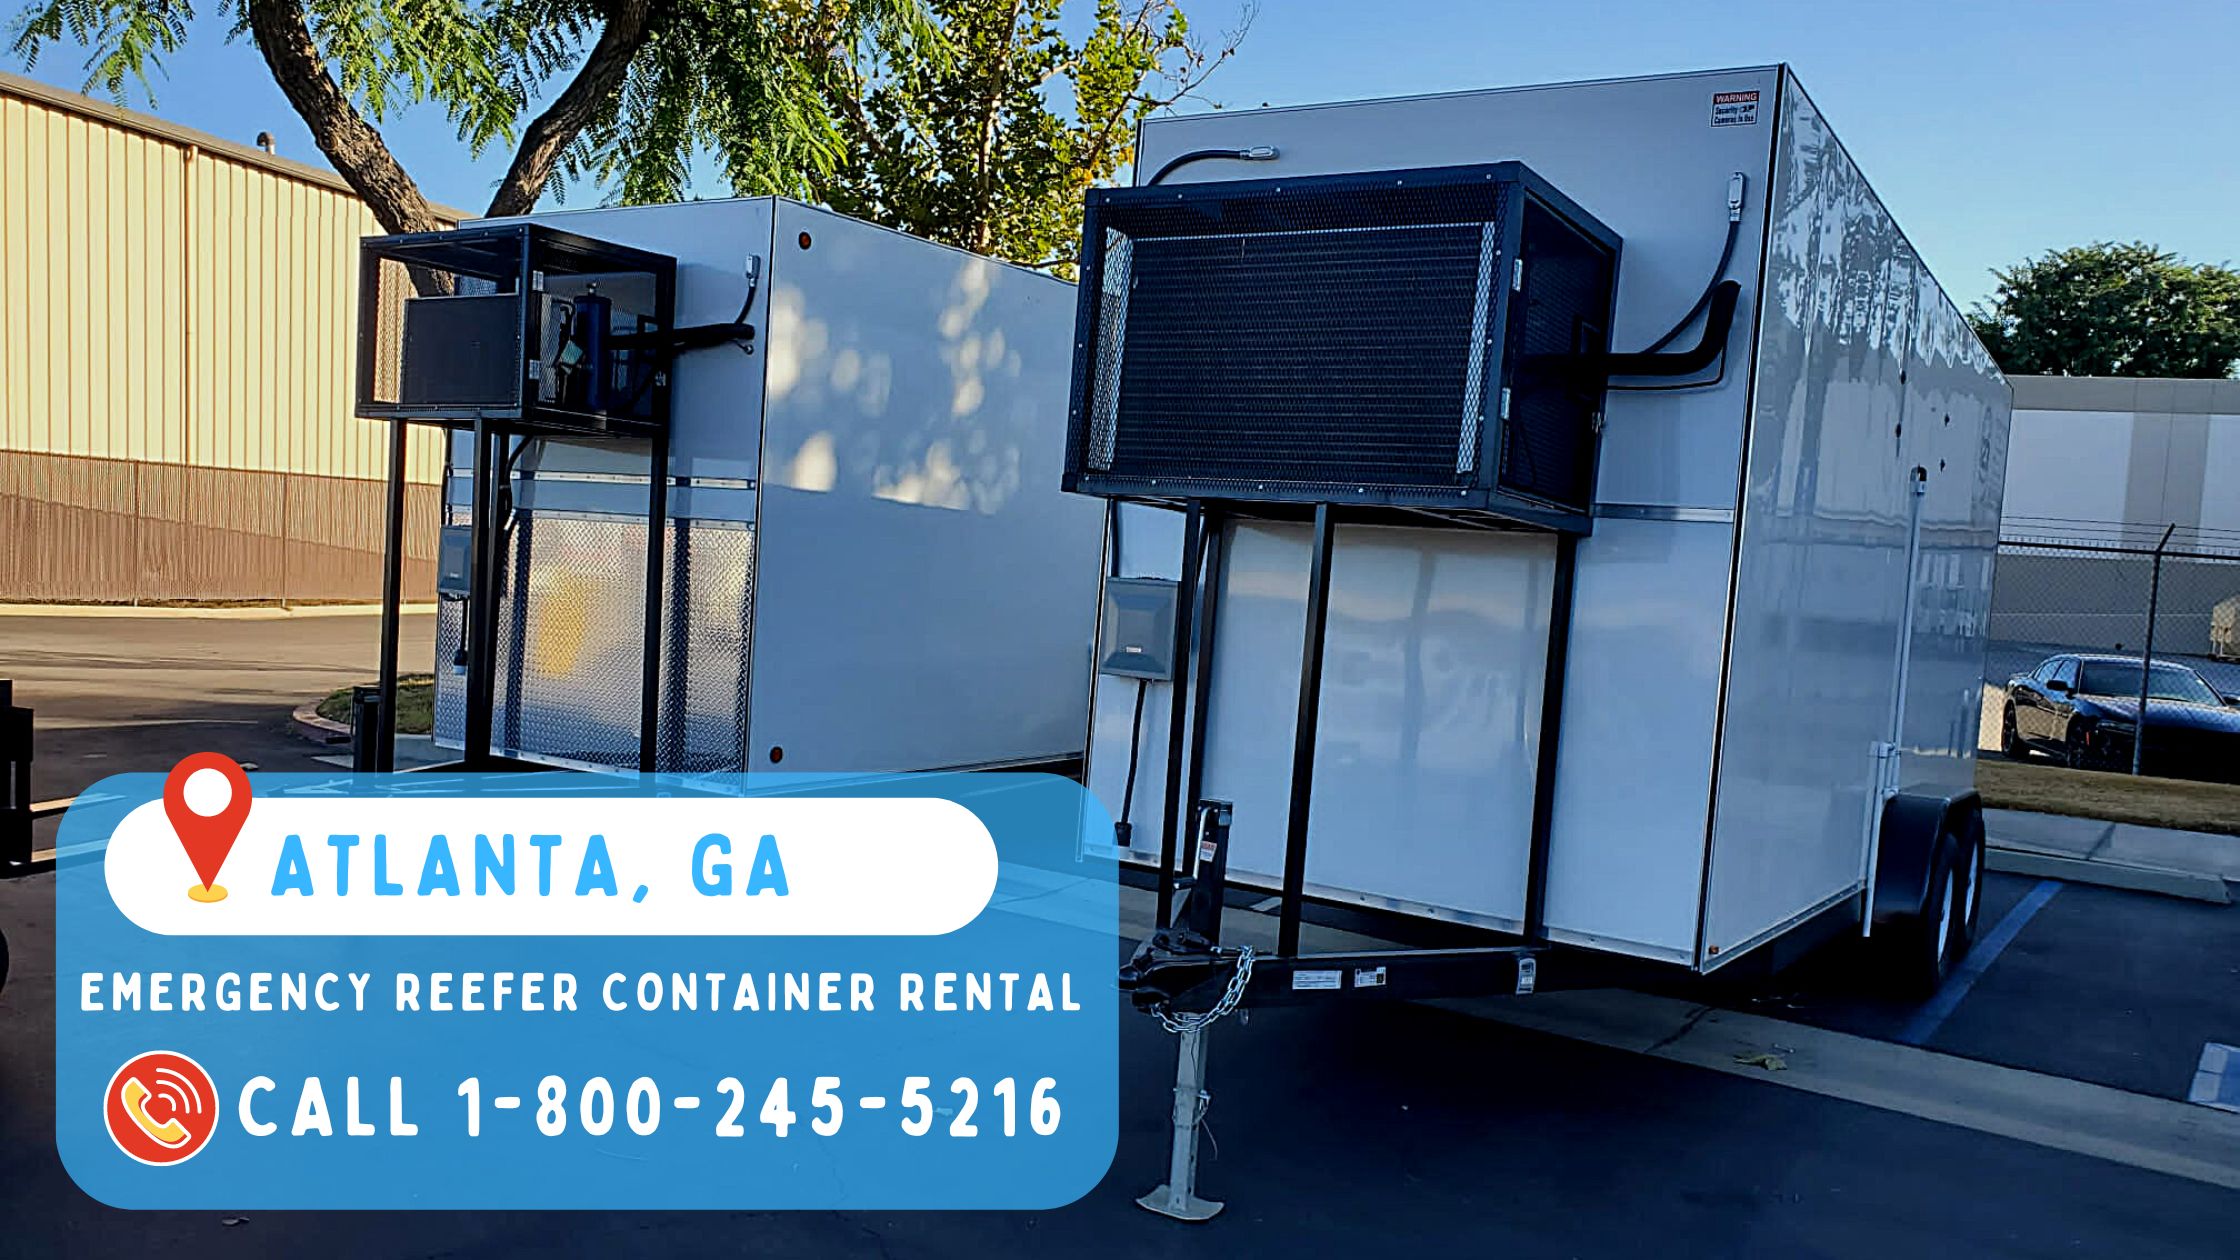 Emergency reefer container rental in Atlanta